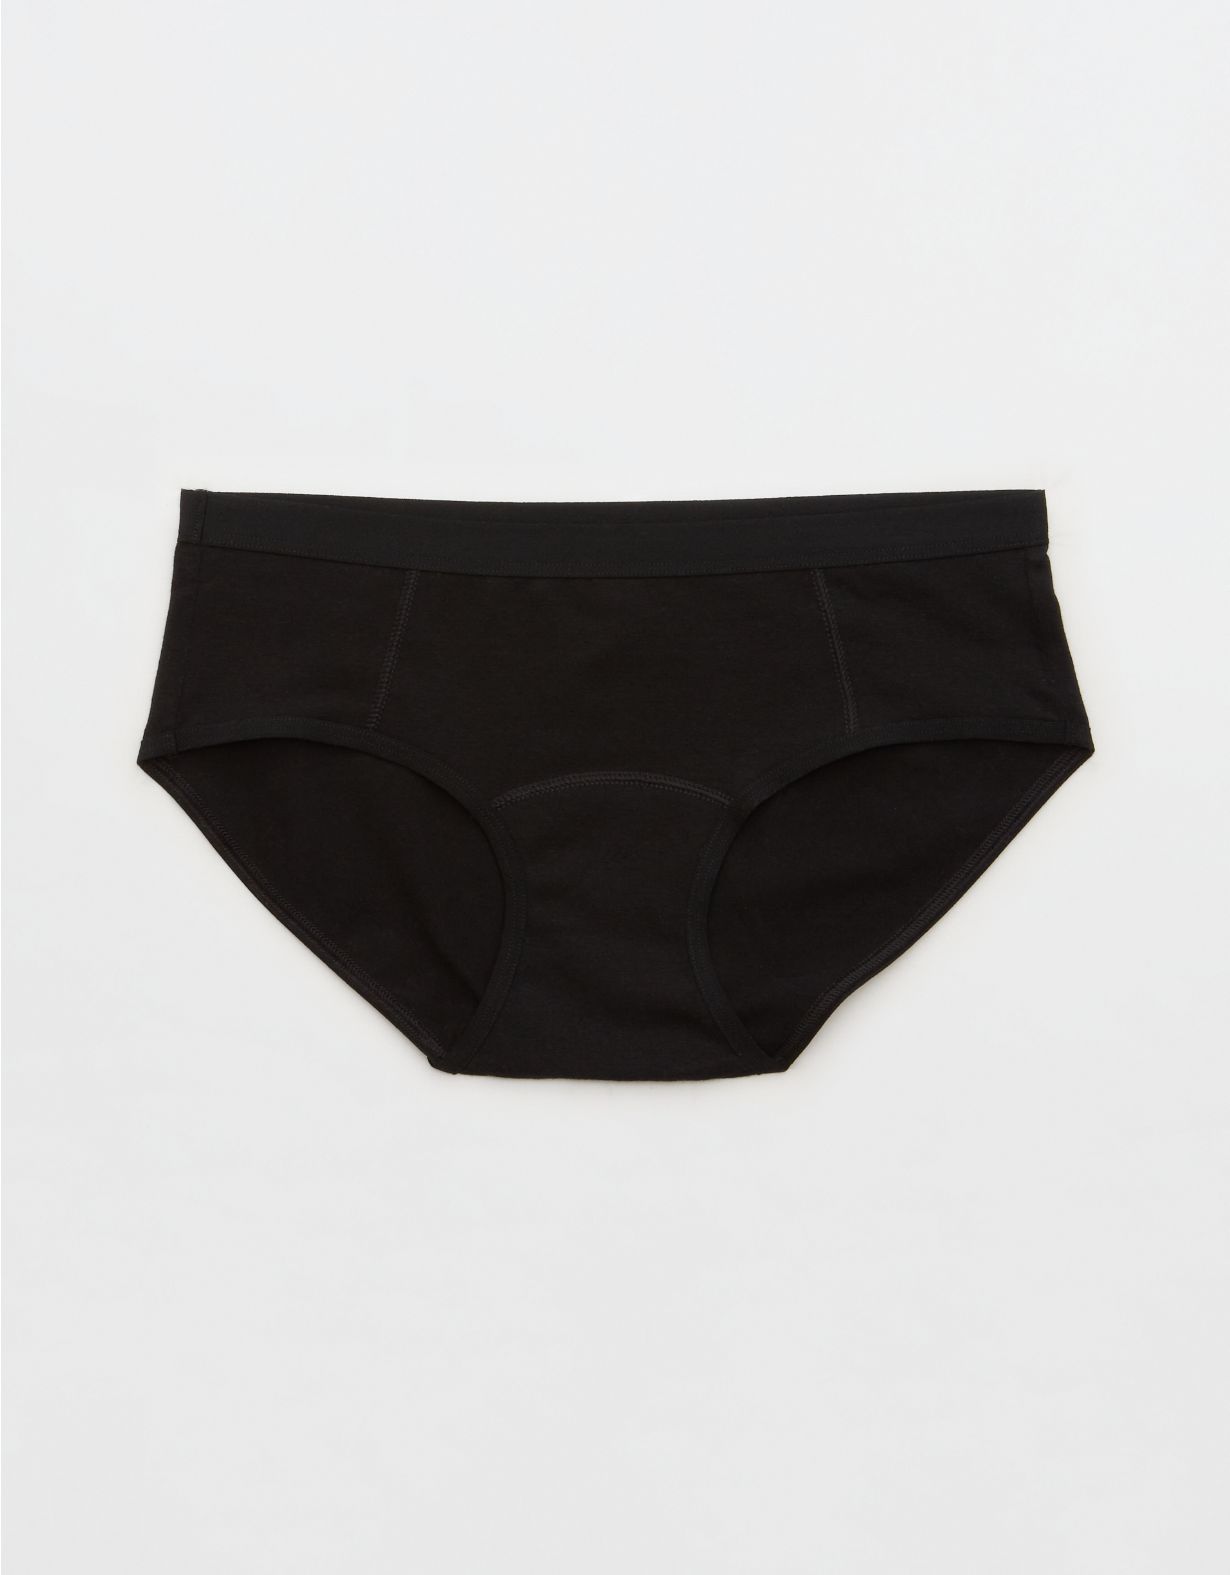 Superchill Cotton Elastic Boybrief Underwear